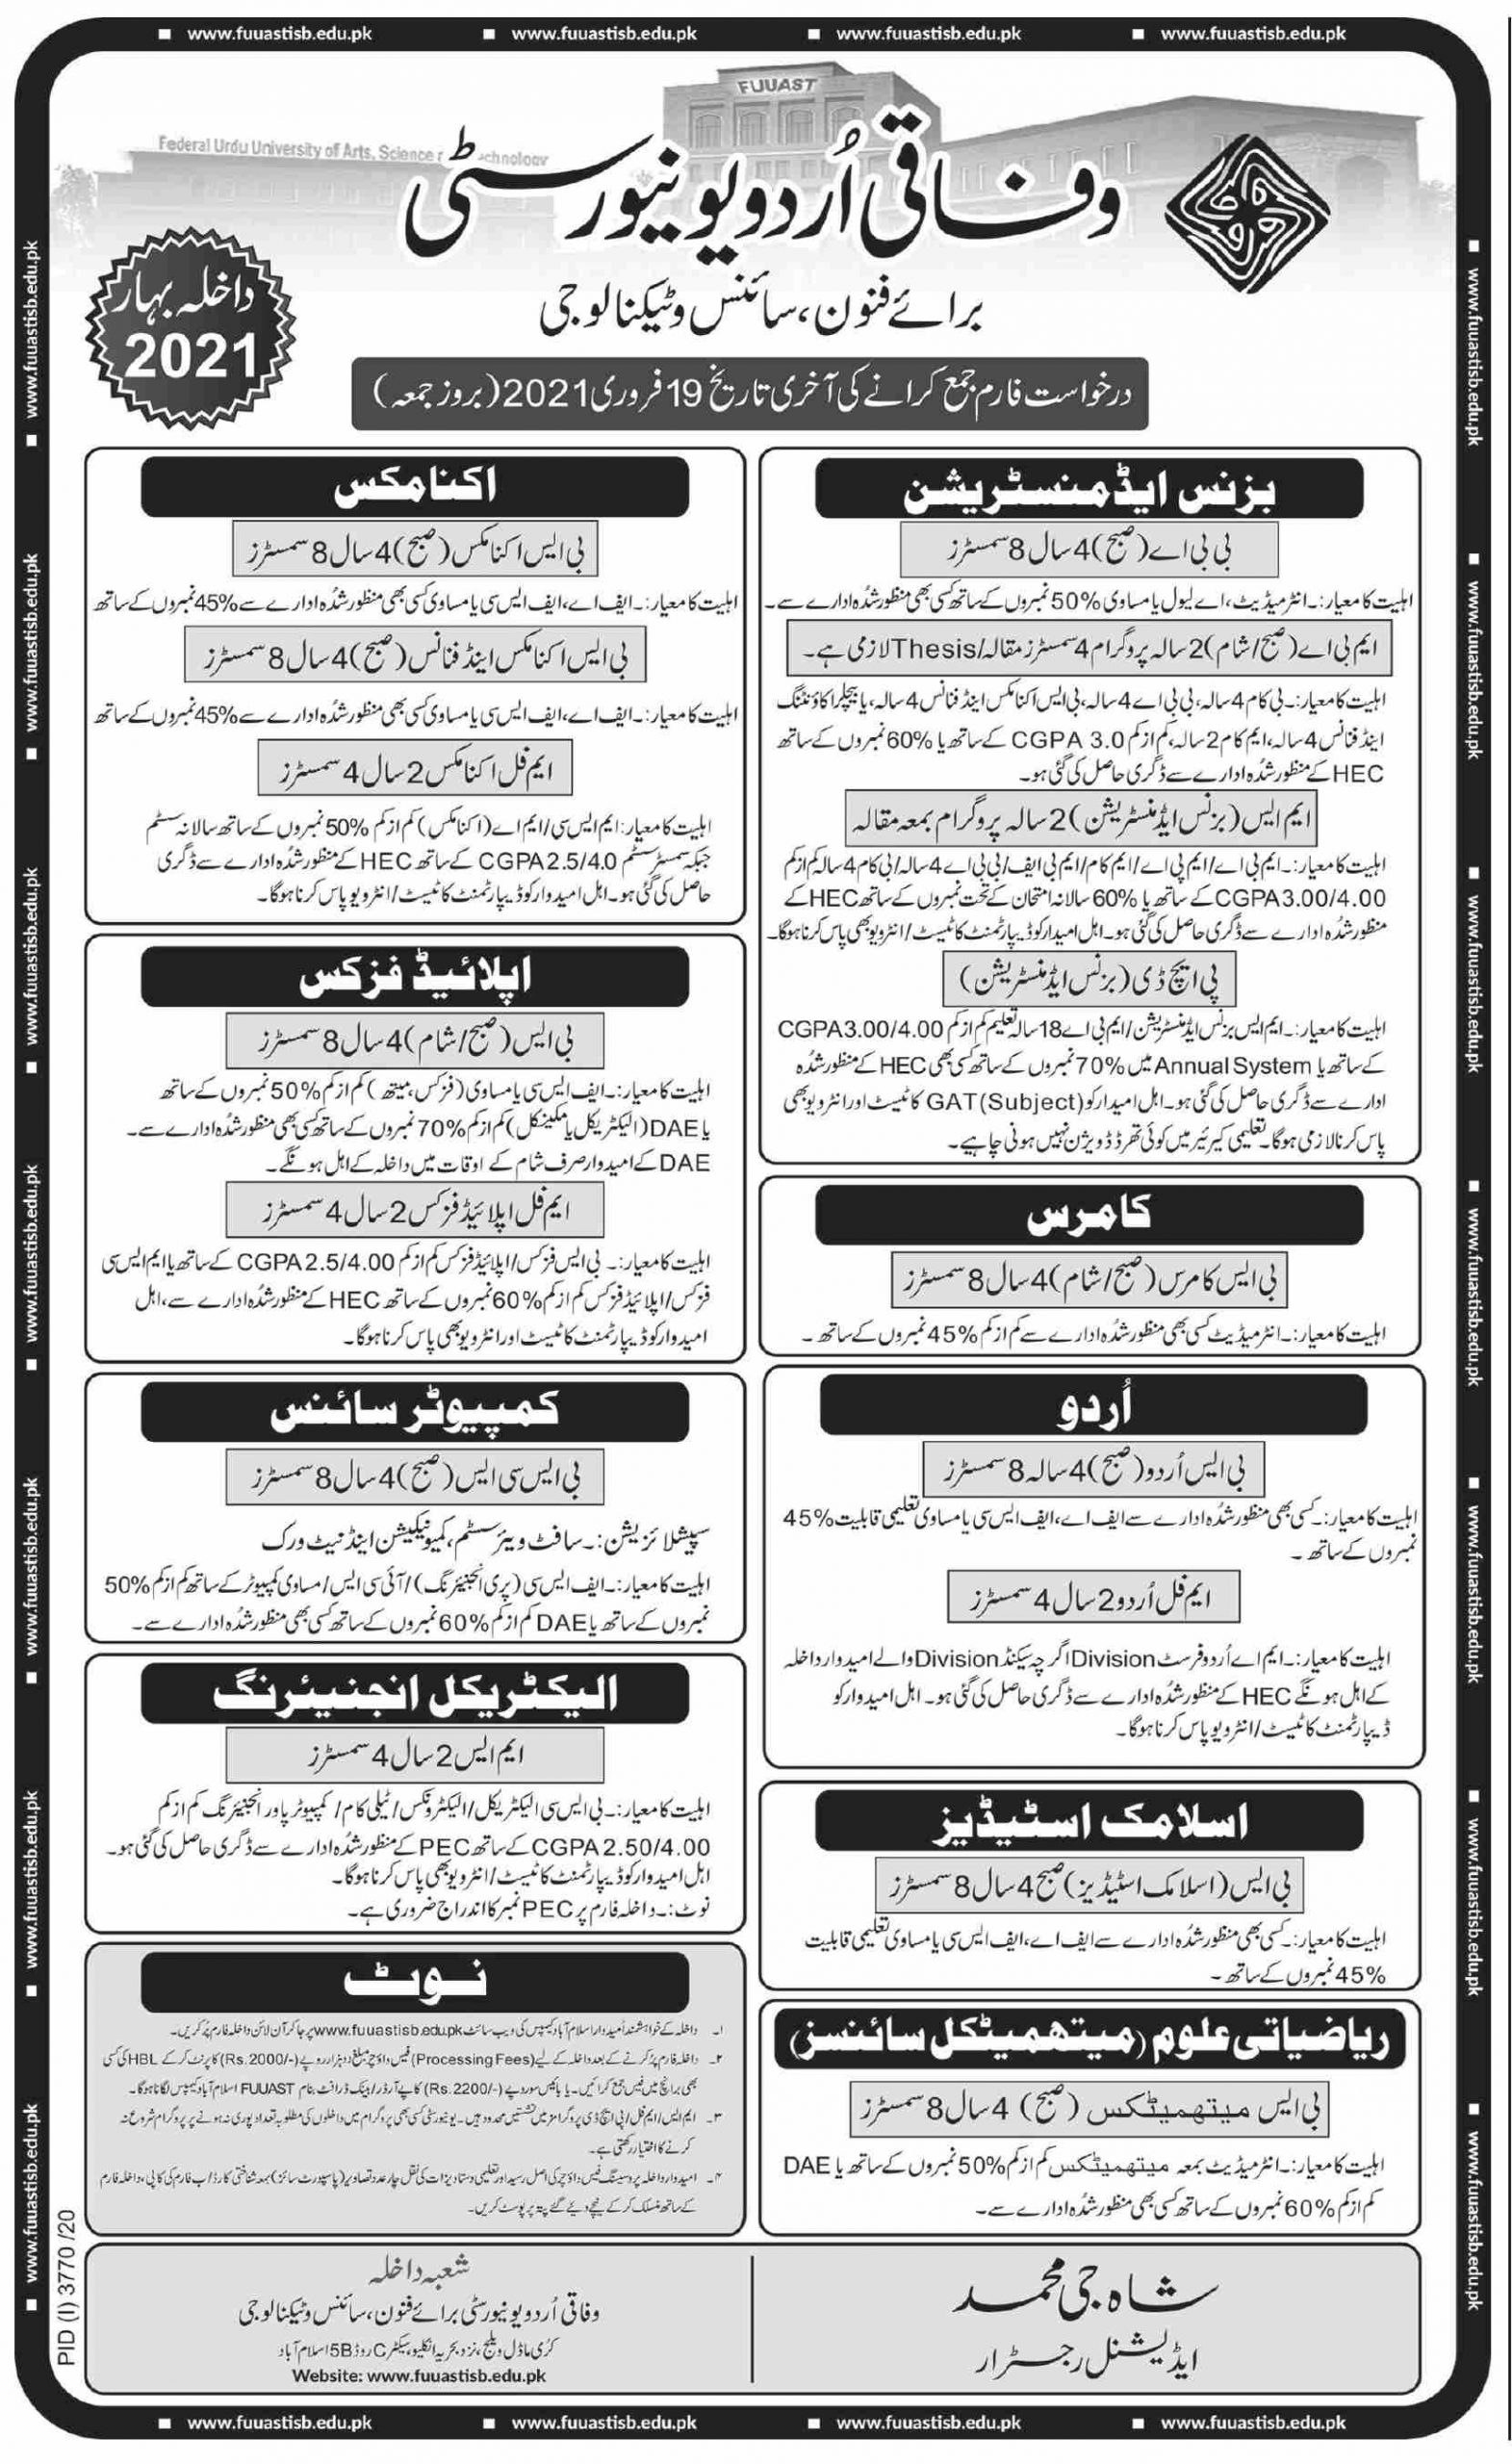 Federal Urdu University Islamabad Merit List 2021 1st, 2nd, 3rd